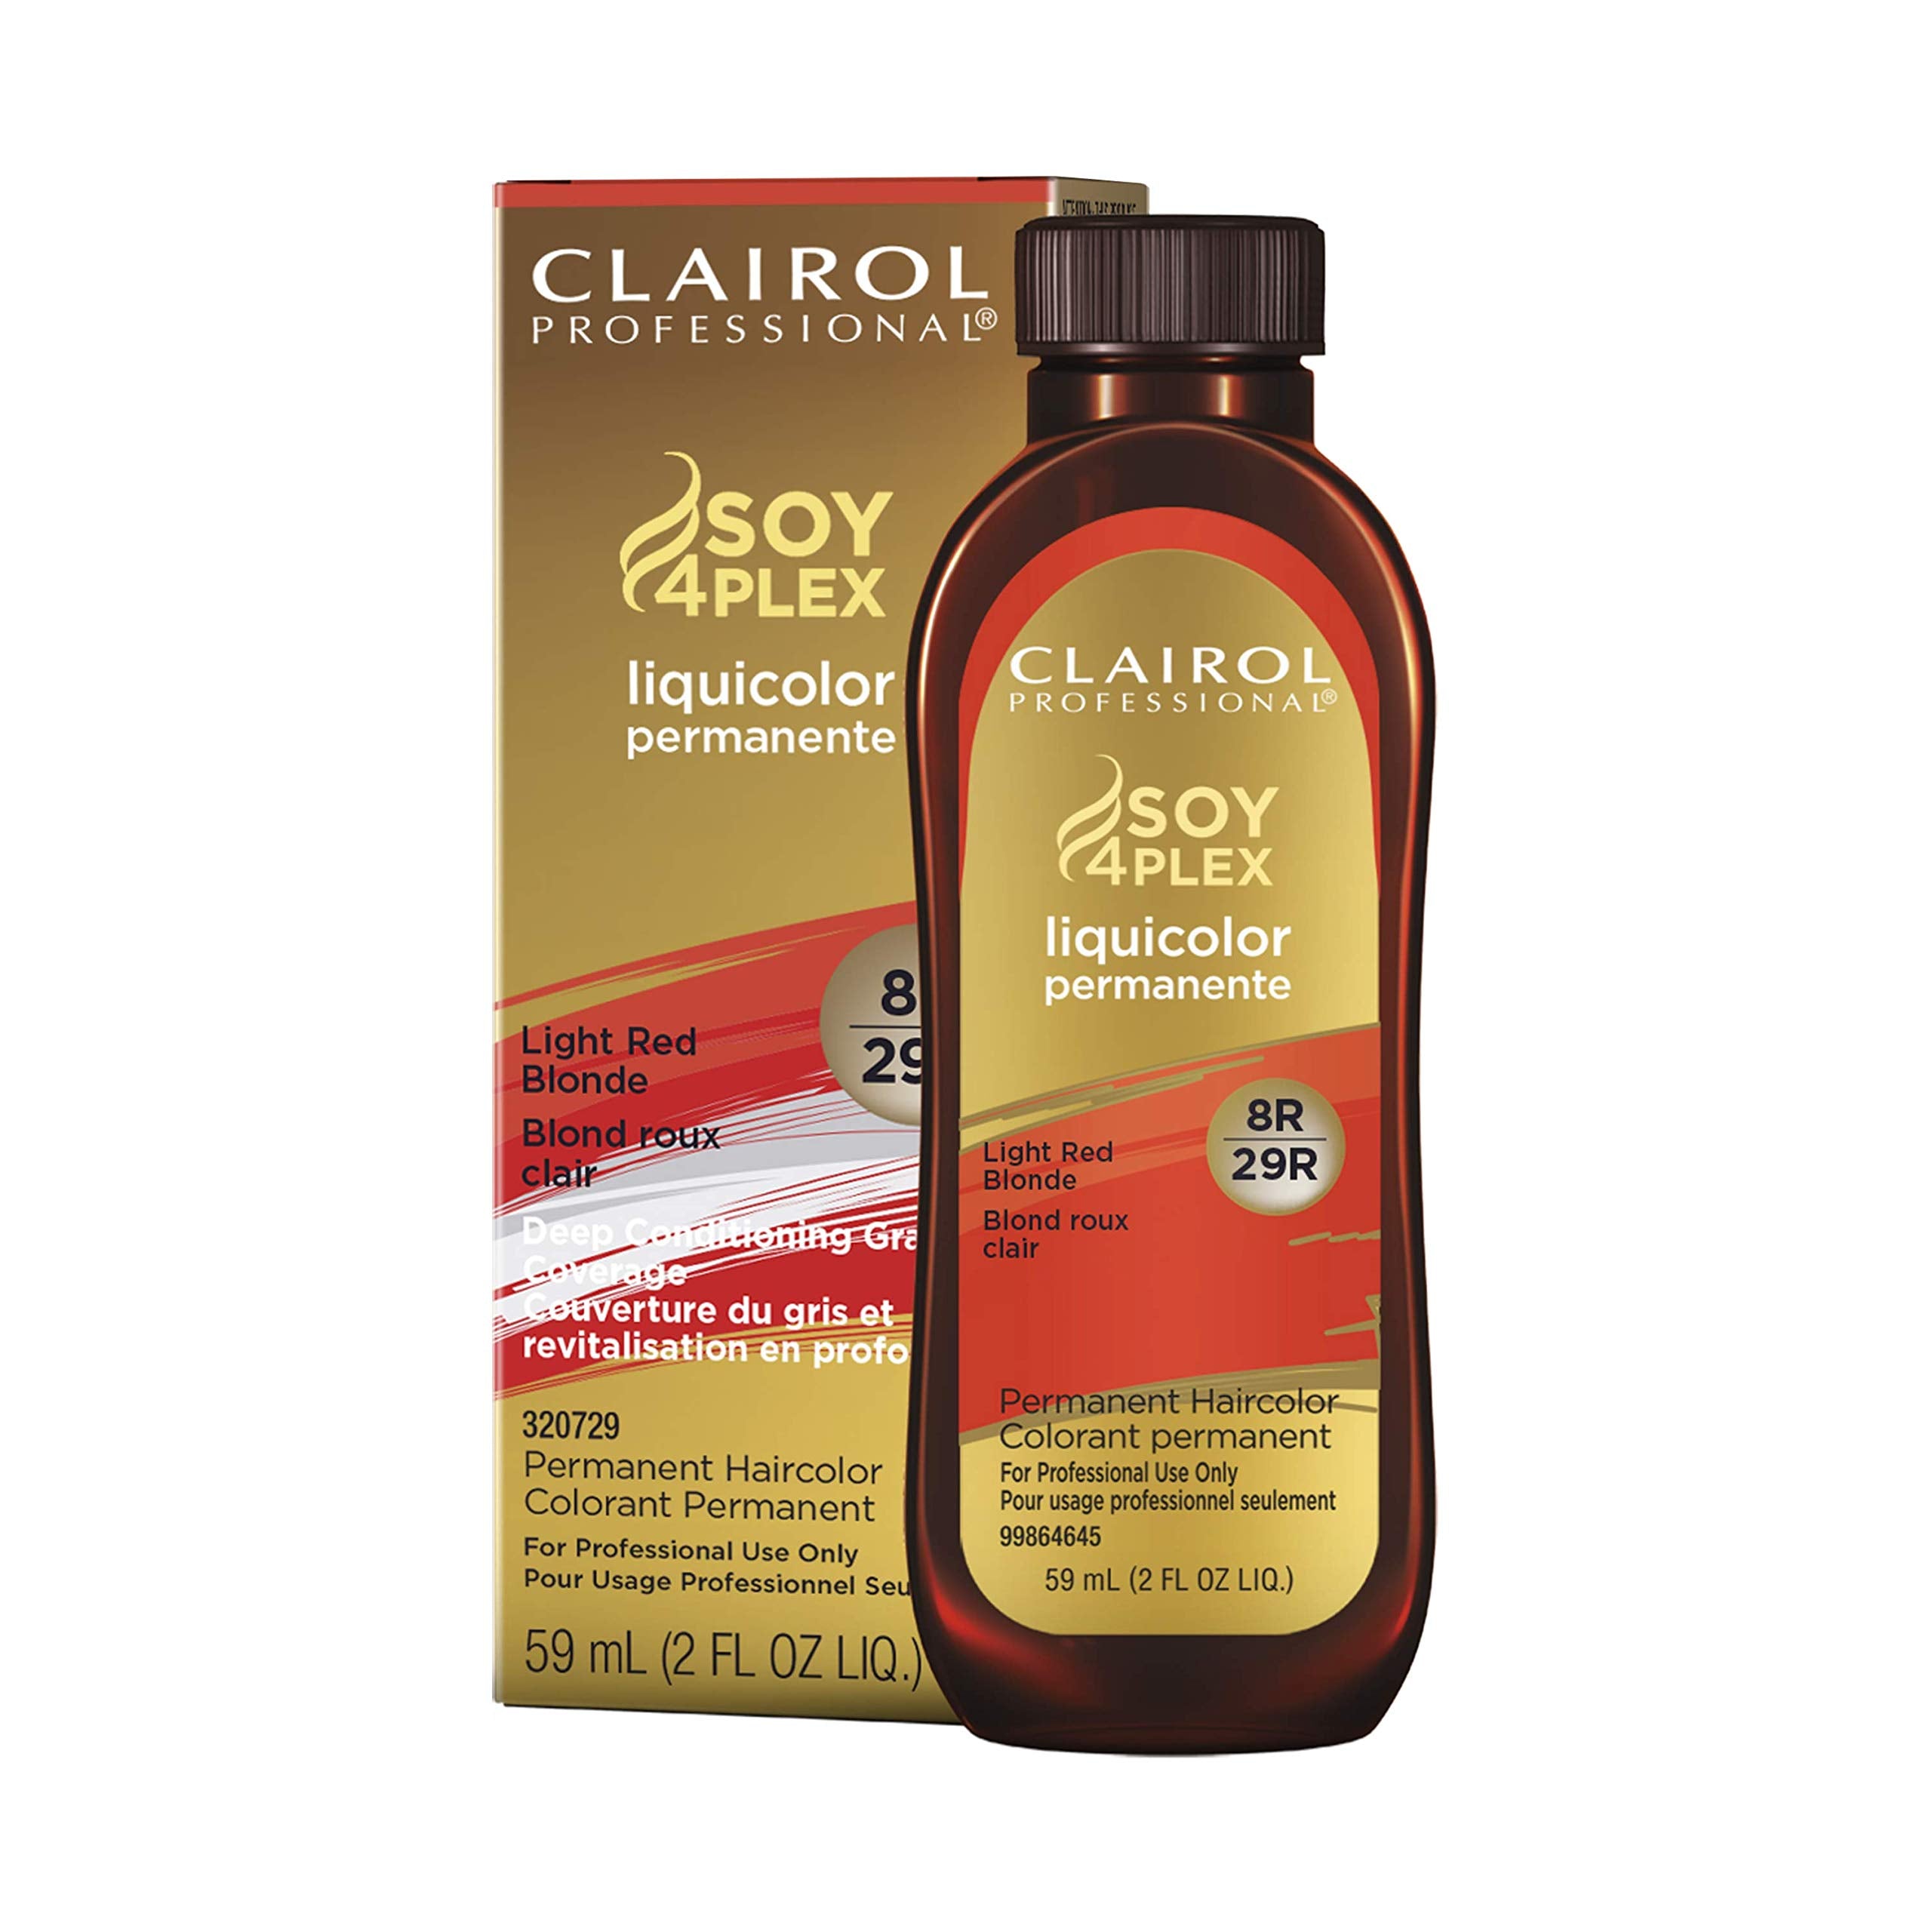 Clairol Soy 4 Plex Liquicolor Permanent Hair Color 2 fl.oz